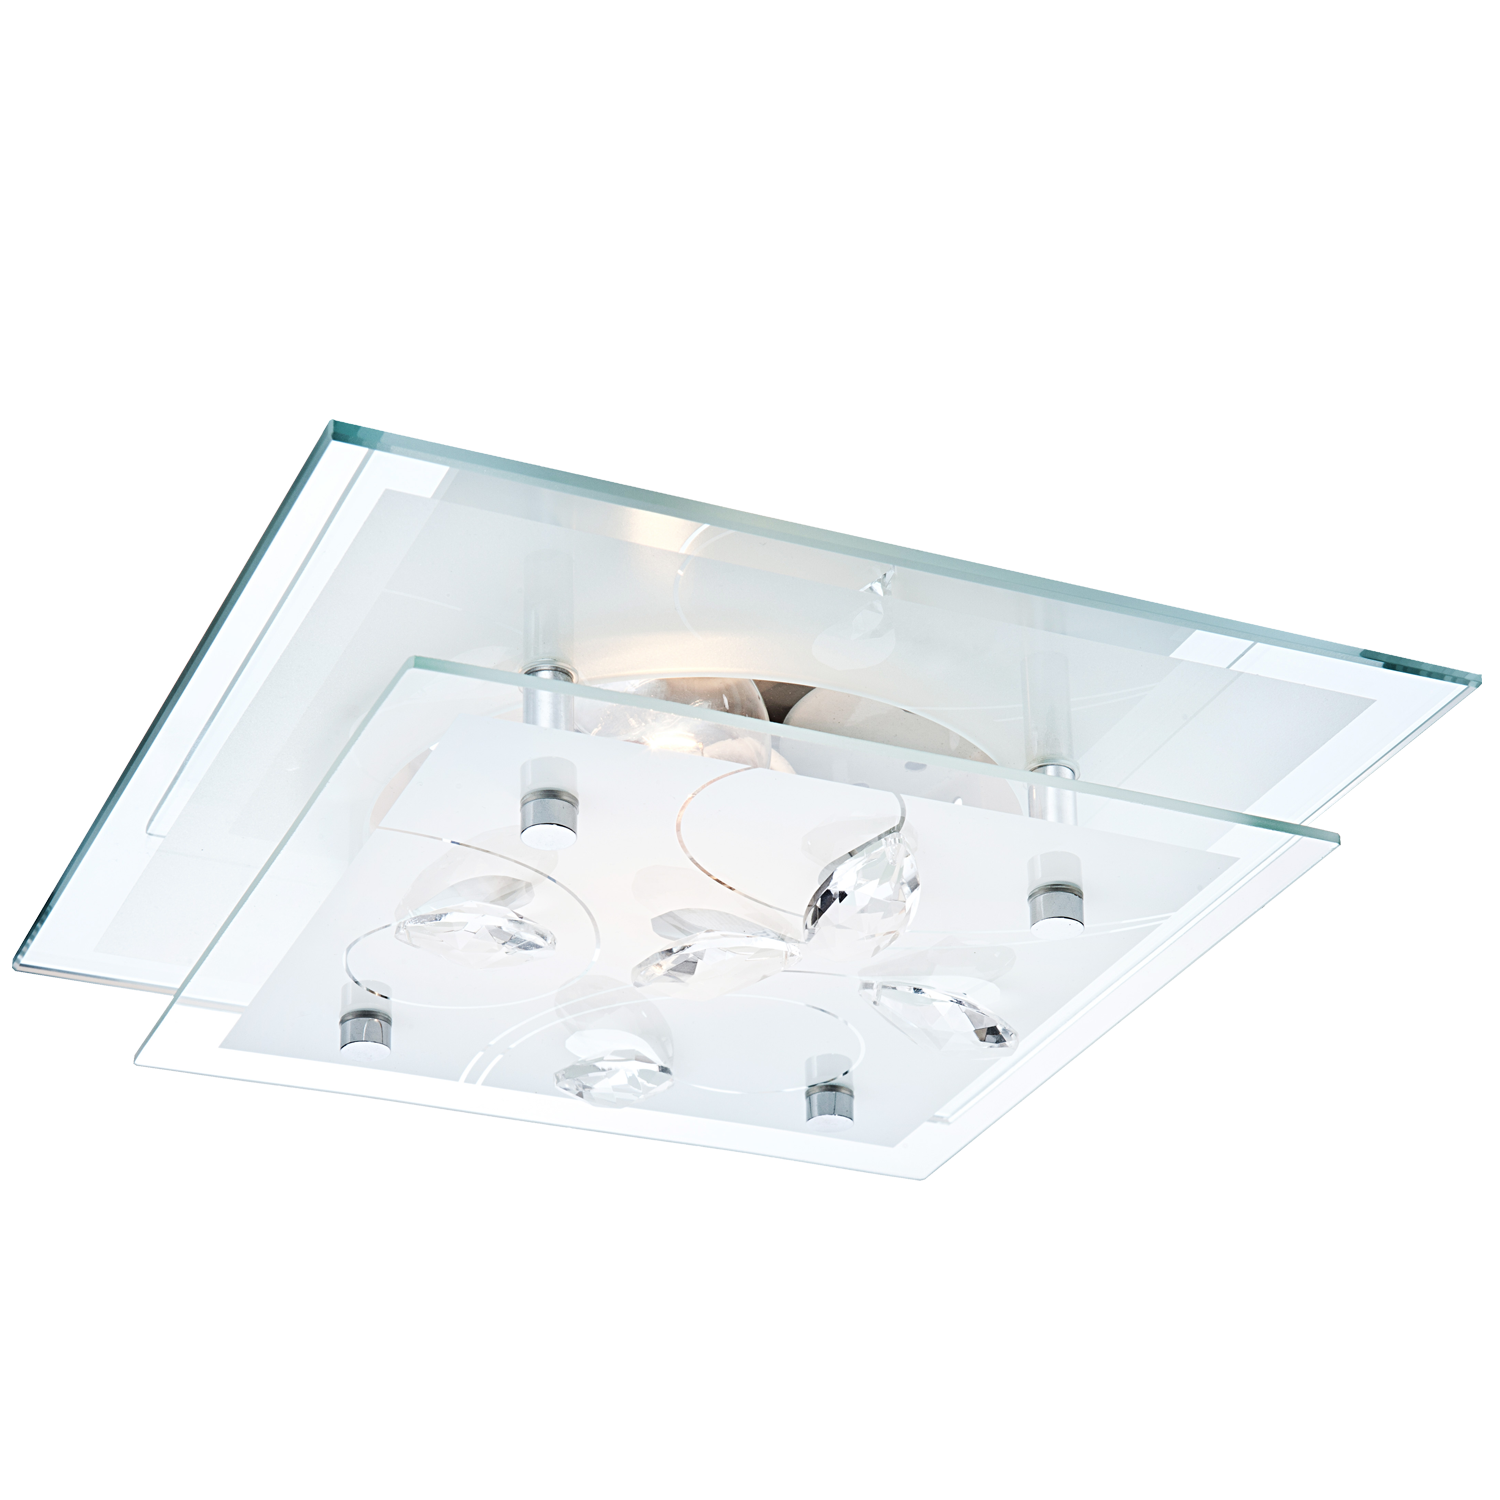 Light Lamp Fixture Ceiling Plafond Free Transparent Image HQ Clipart